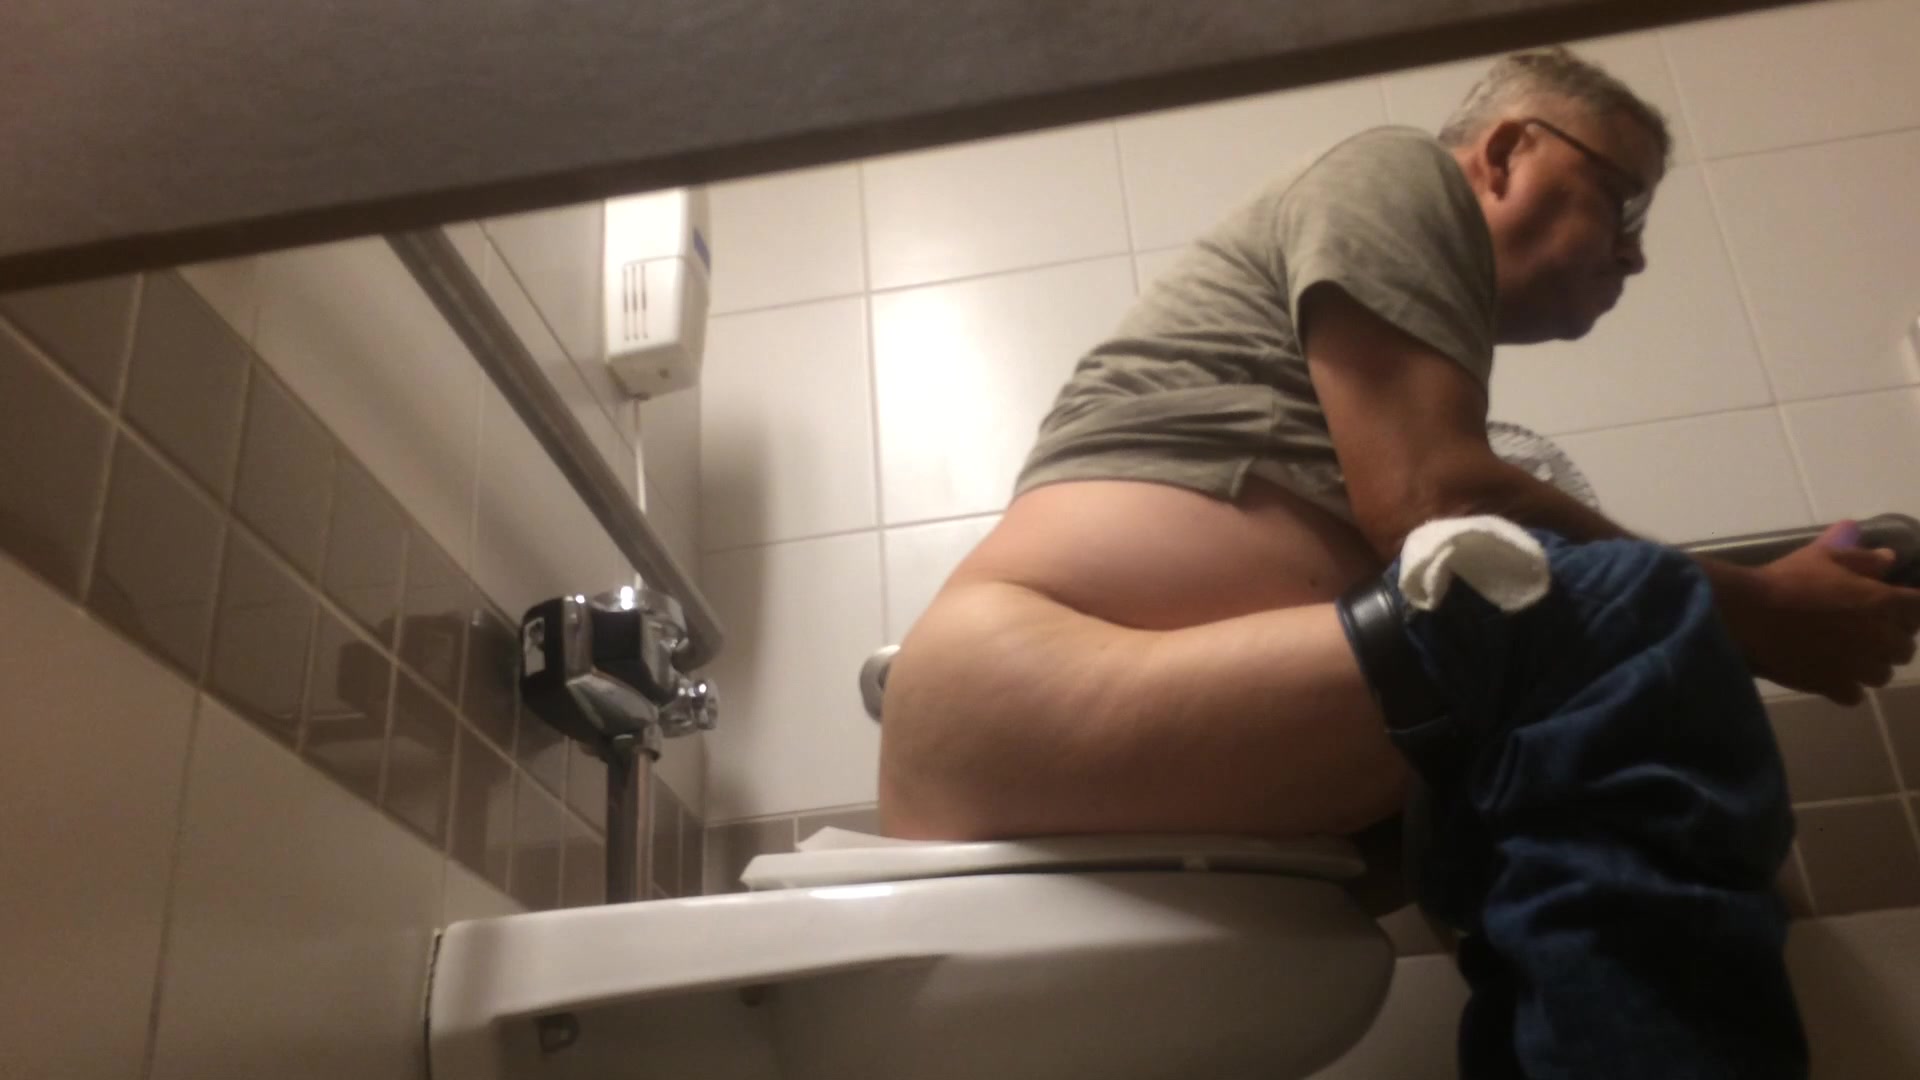 men bathroom urinal voyeur pics video